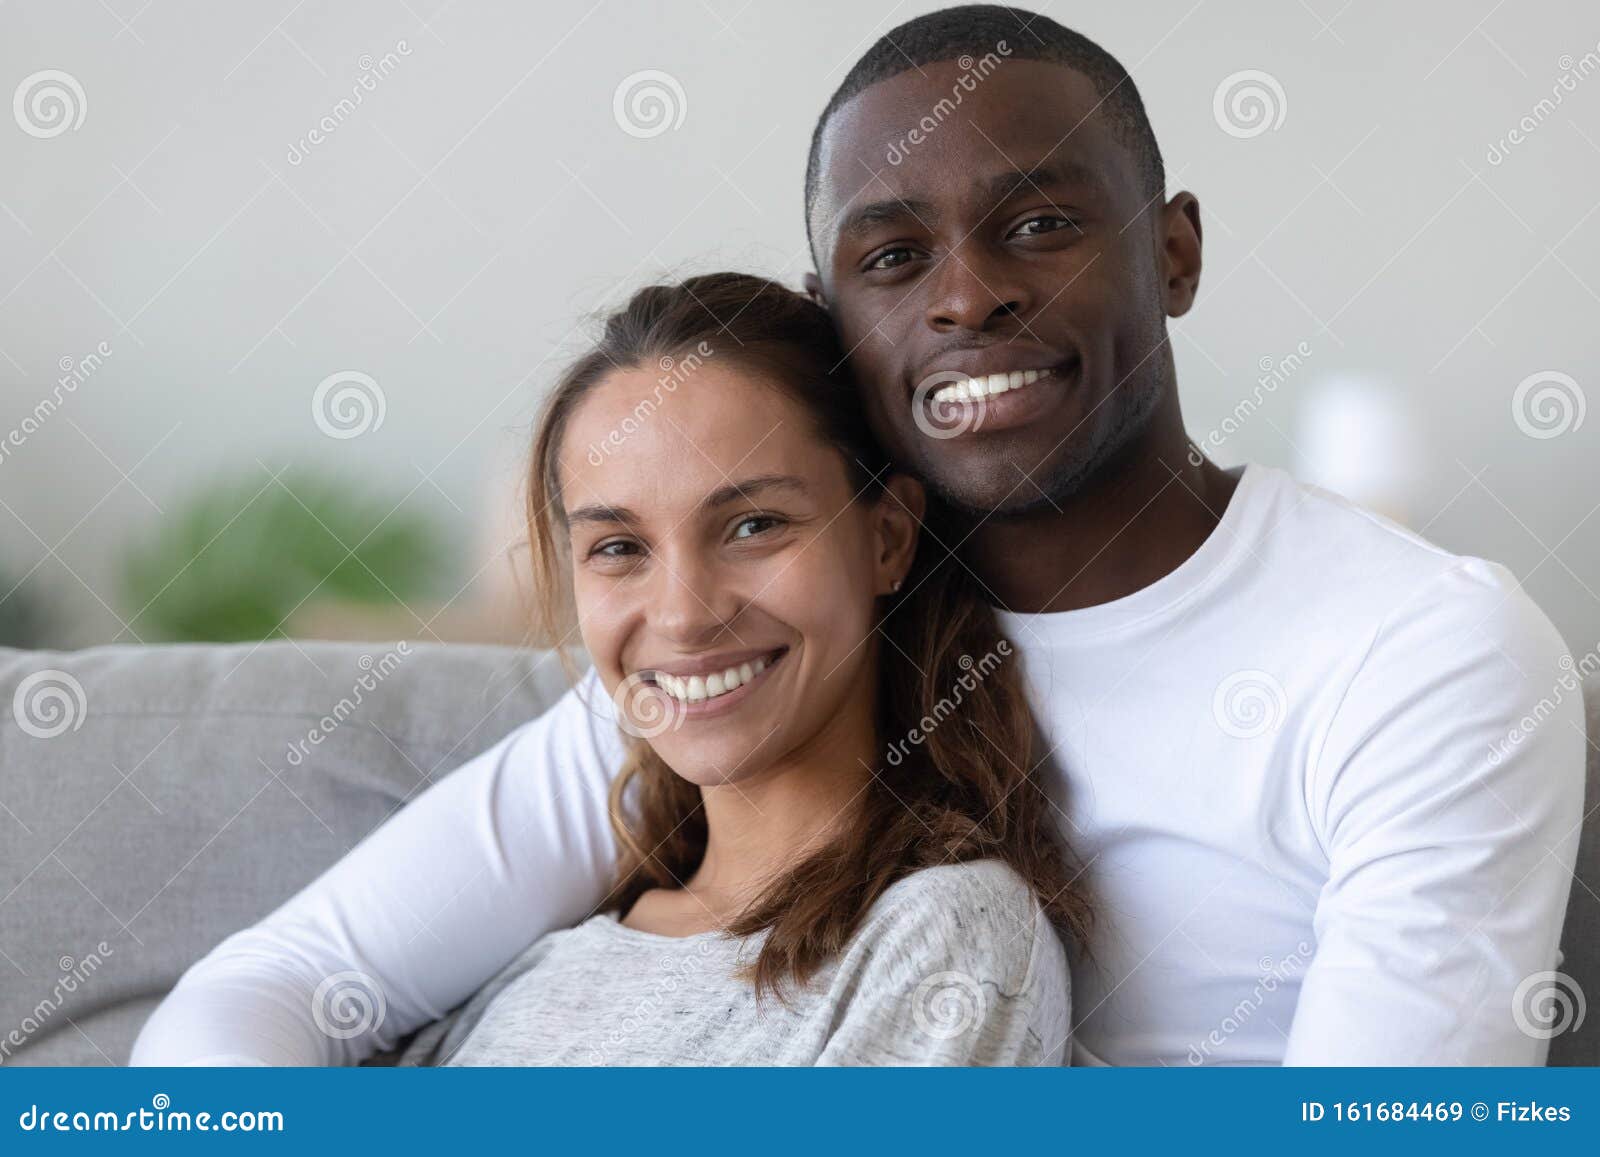 https://thumbs.dreamstime.com/z/portrait-happy-international-couple-relaxing-couch-portrait-happy-international-young-couple-hug-look-camera-relaxing-161684469.jpg